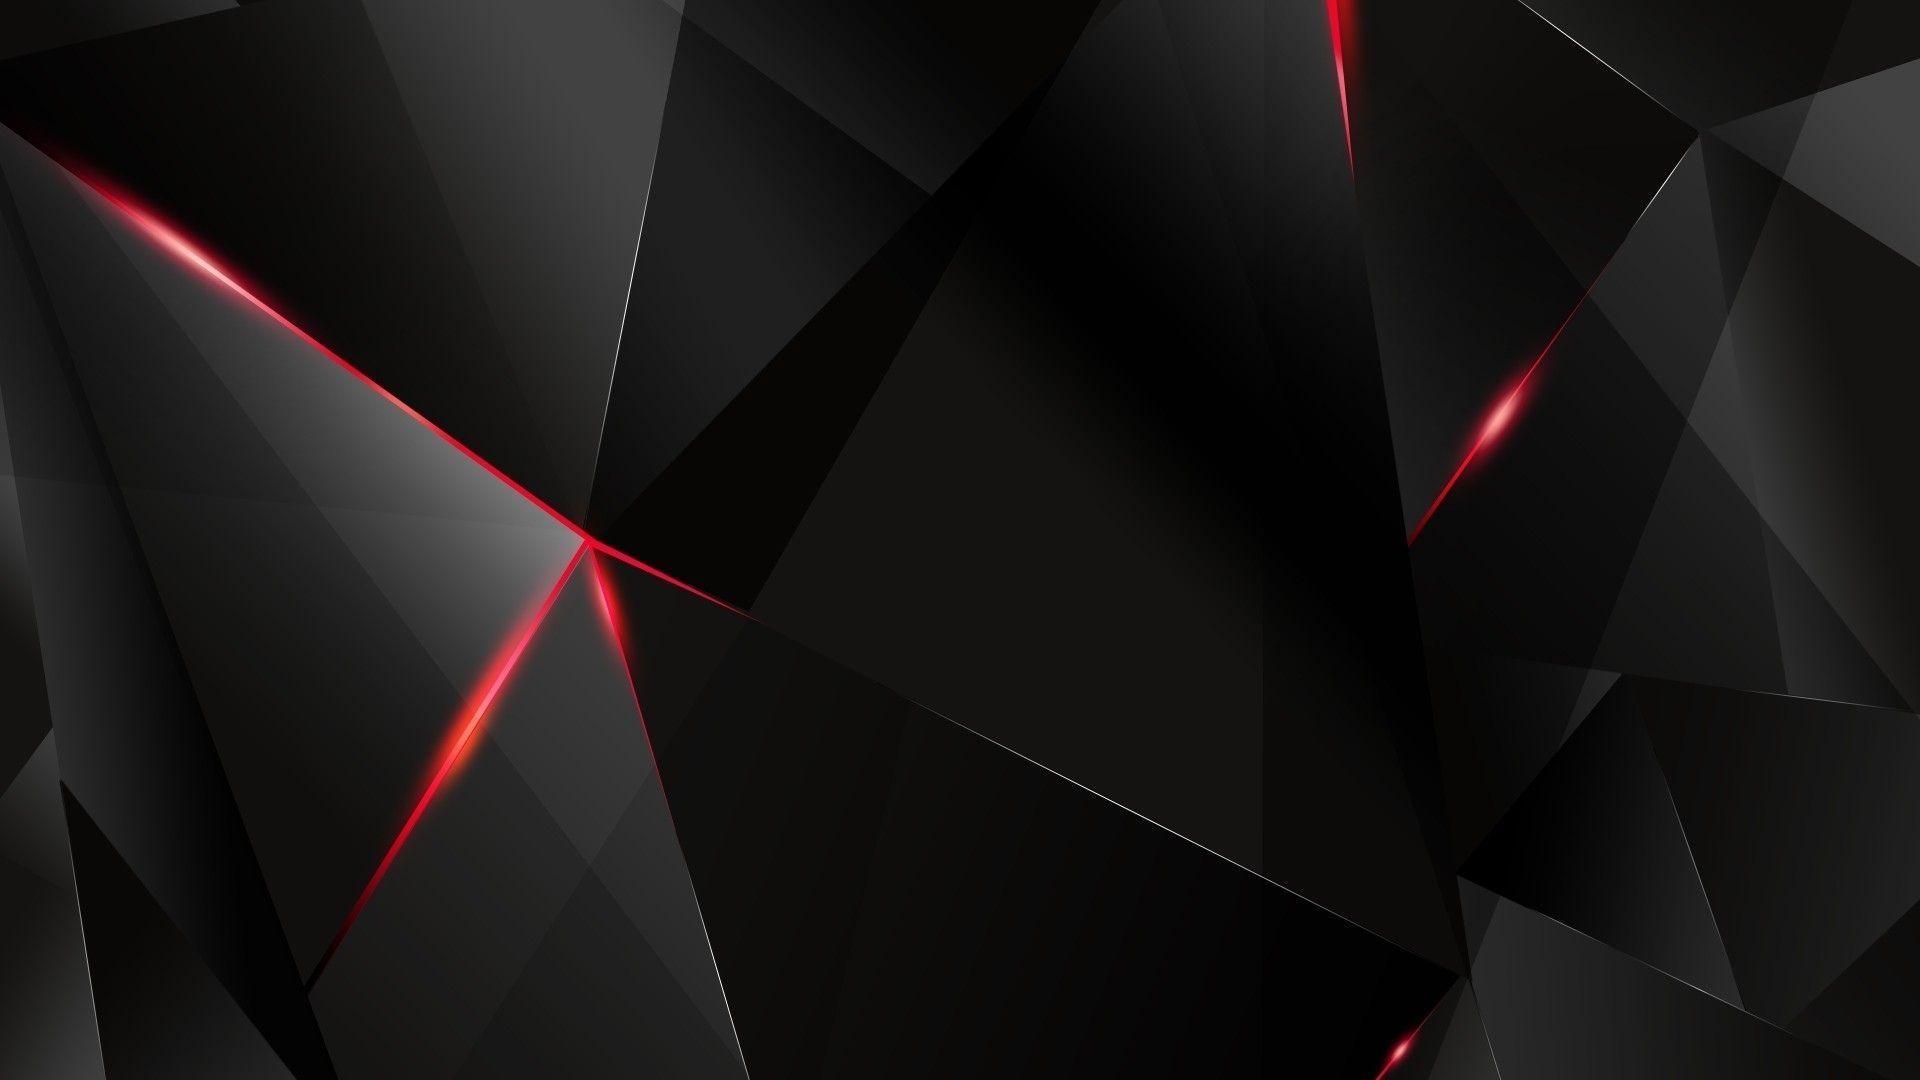 Dark Matter HD Wallpaper for Android